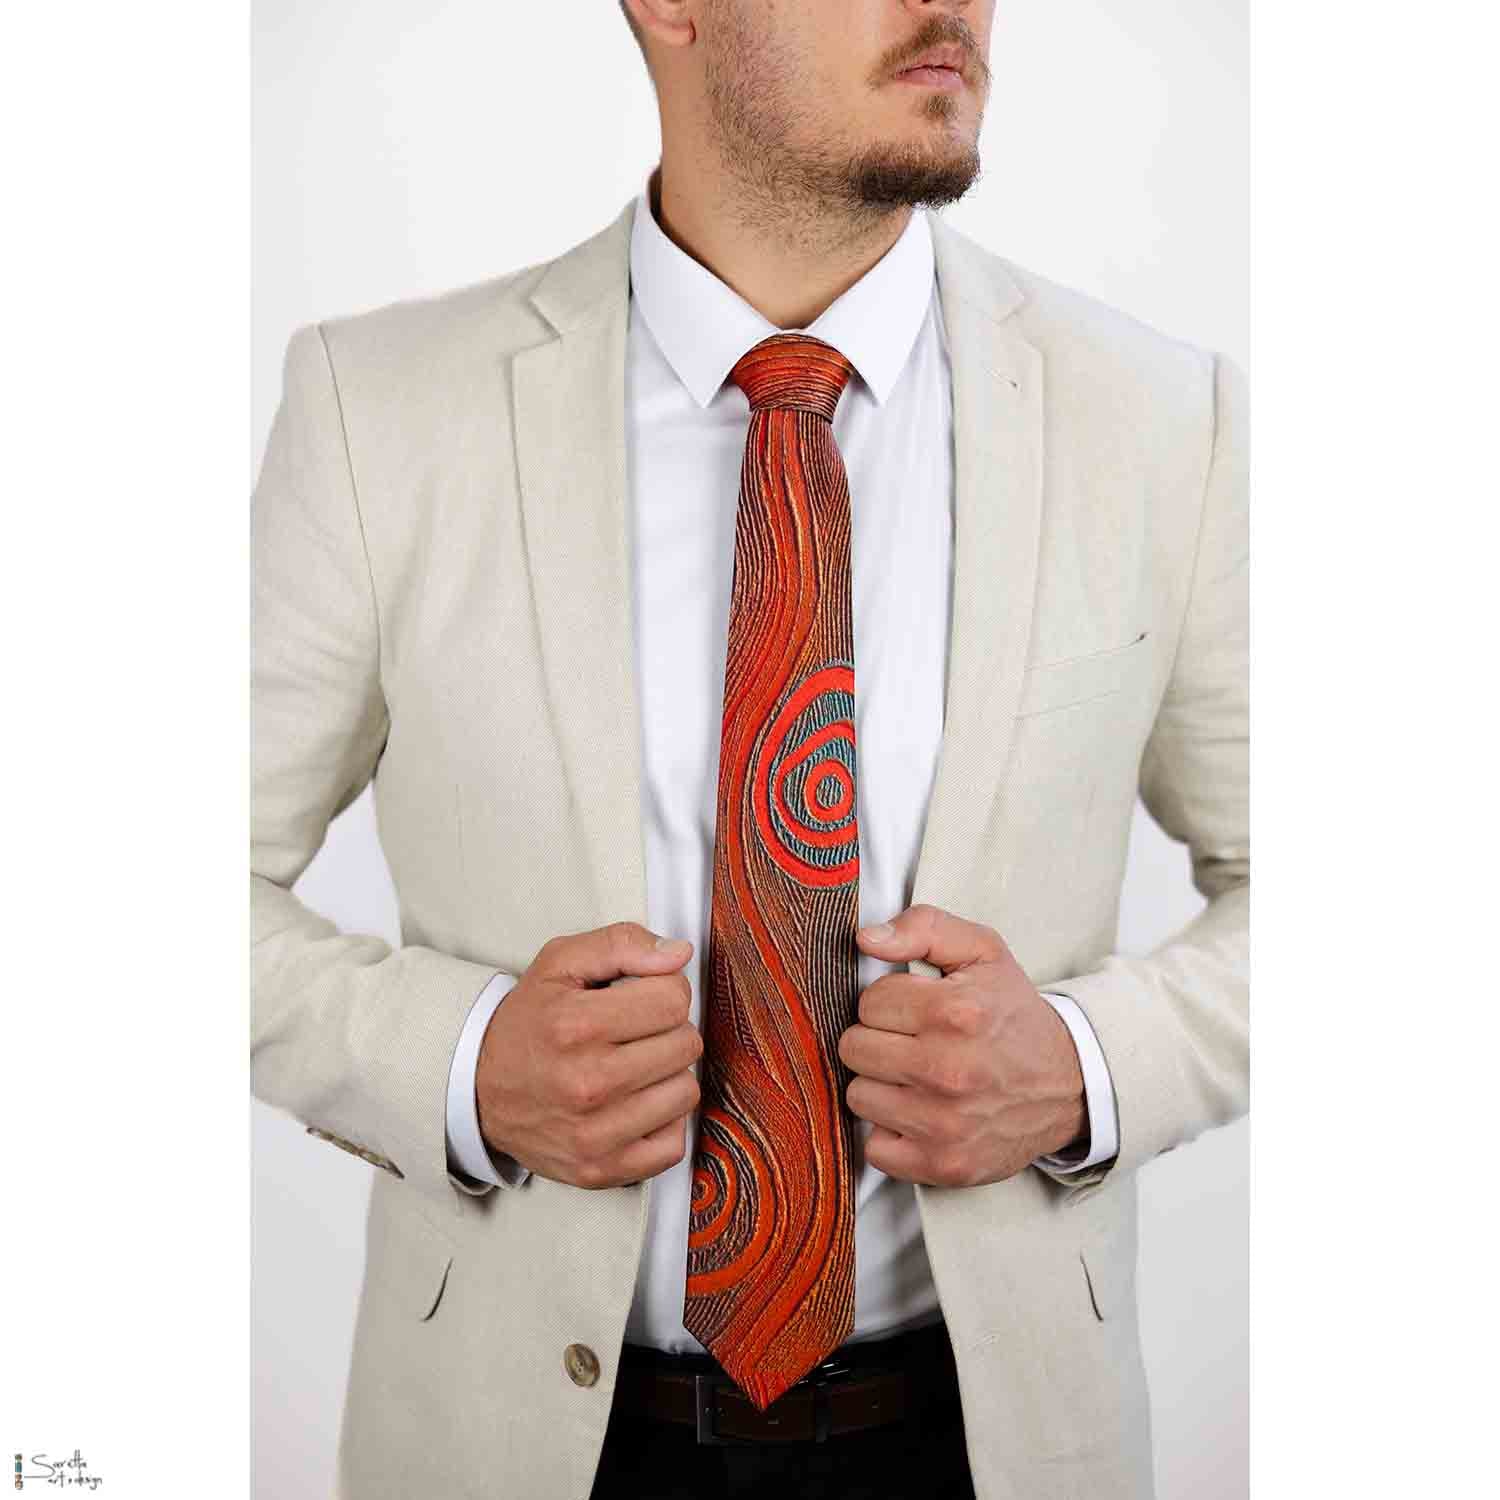 Men's Tie - Kari Kari - Beginning Time - Saretta Art & Design